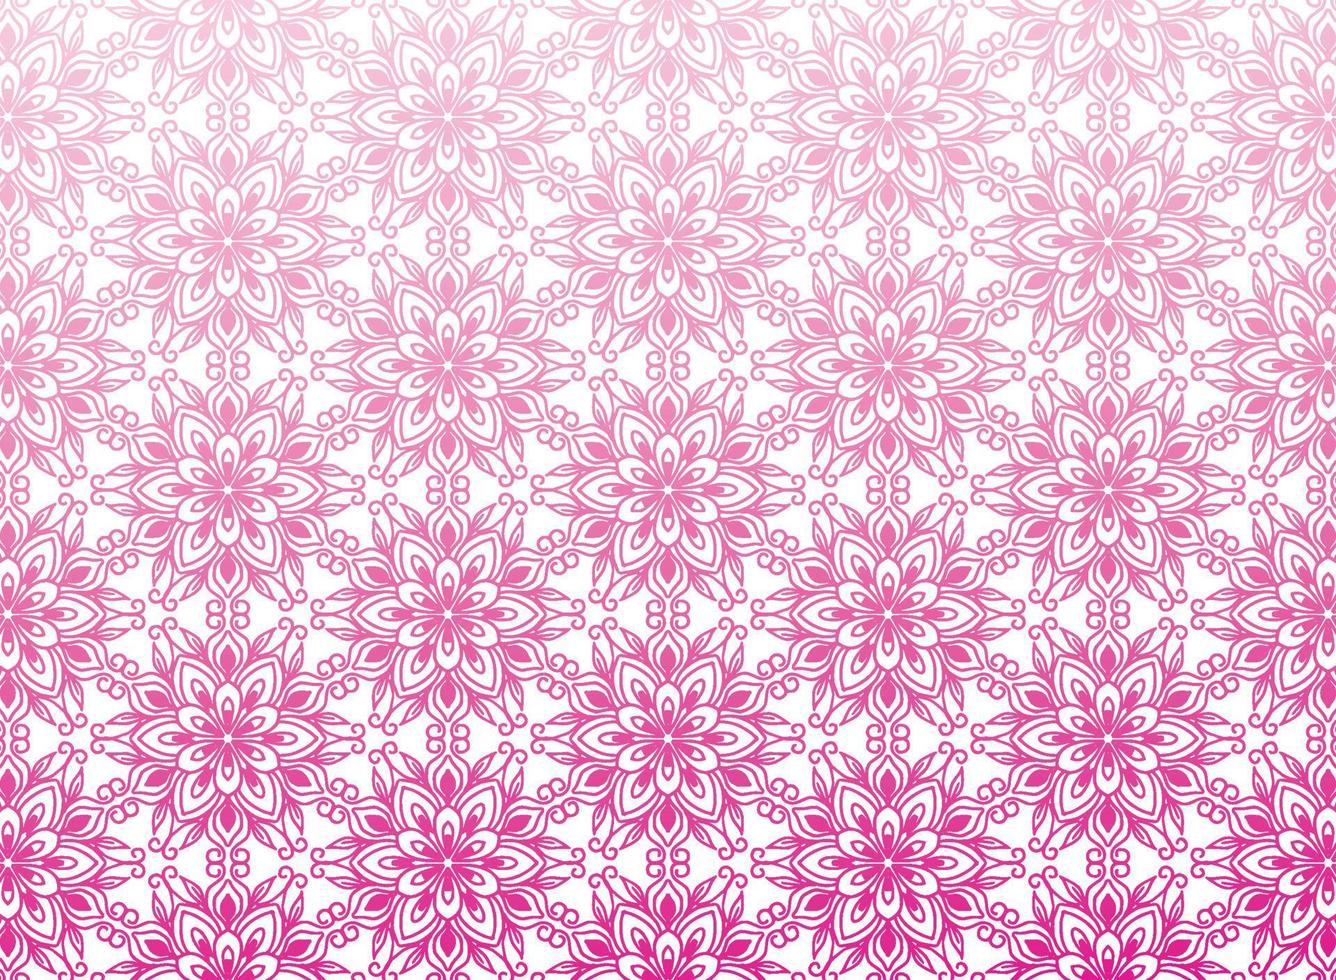 Ethnic decorative pink floral mandala pattern on white background vector